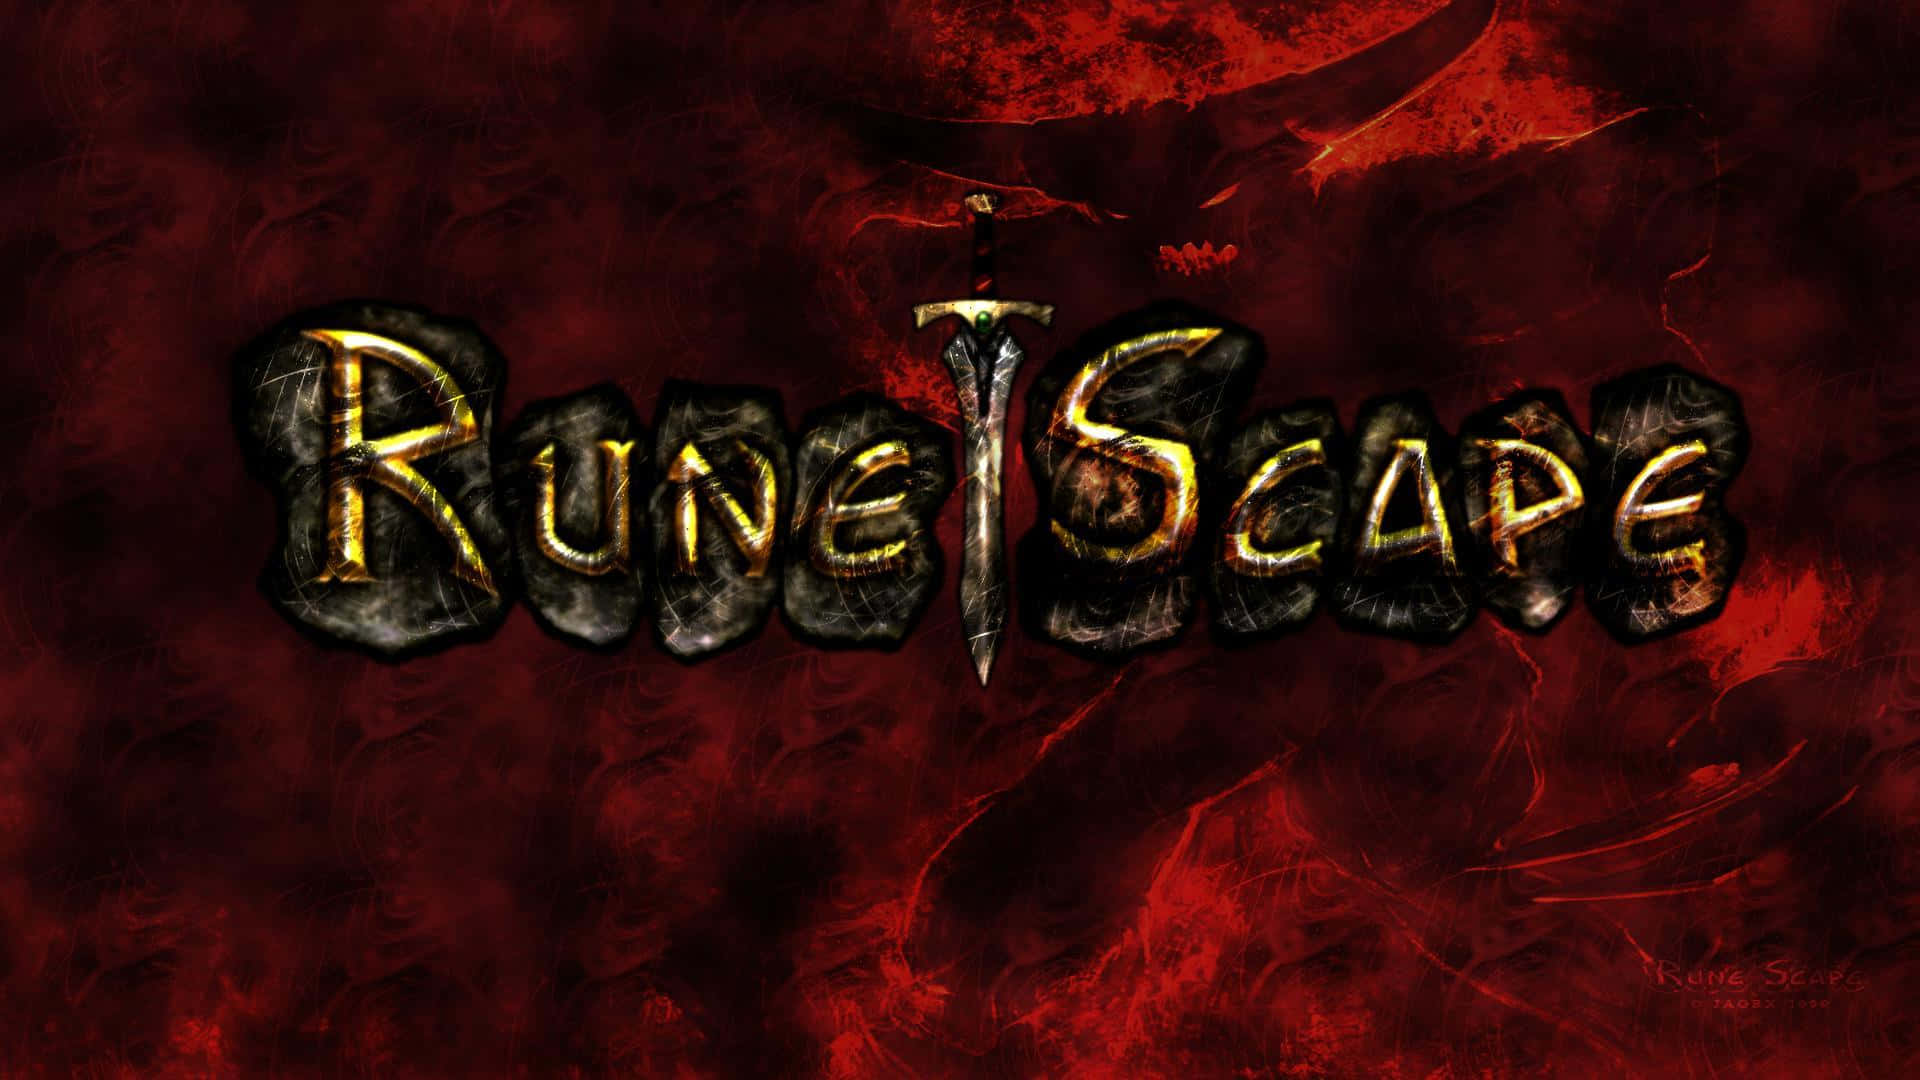 the logo for runescape